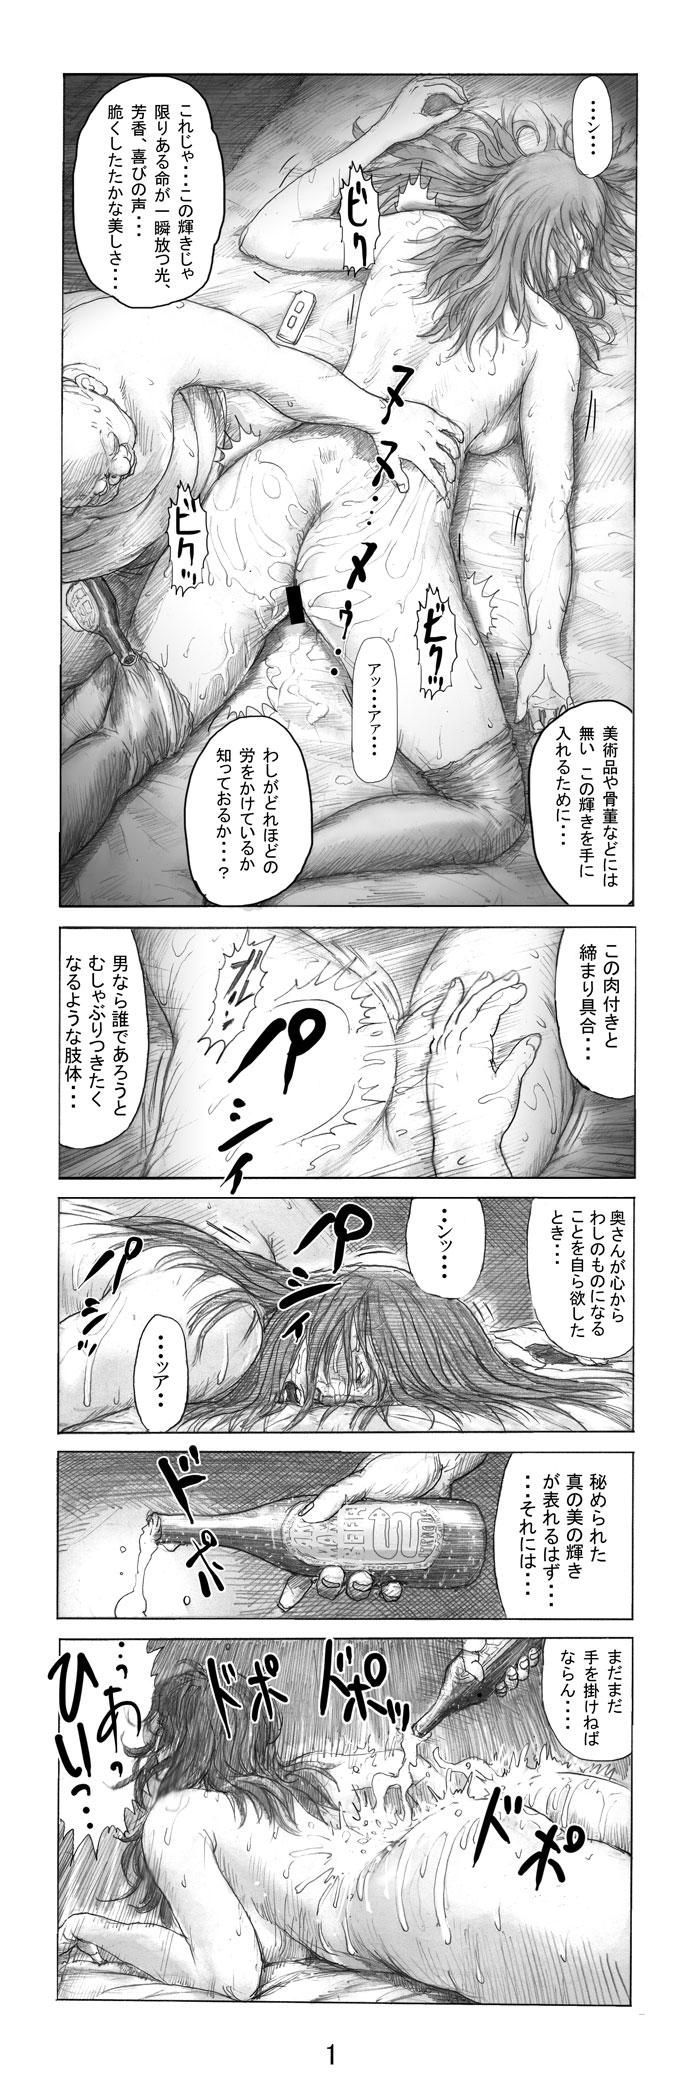 Lima Utsukushii no Shingen Part 3 Art - Page 2